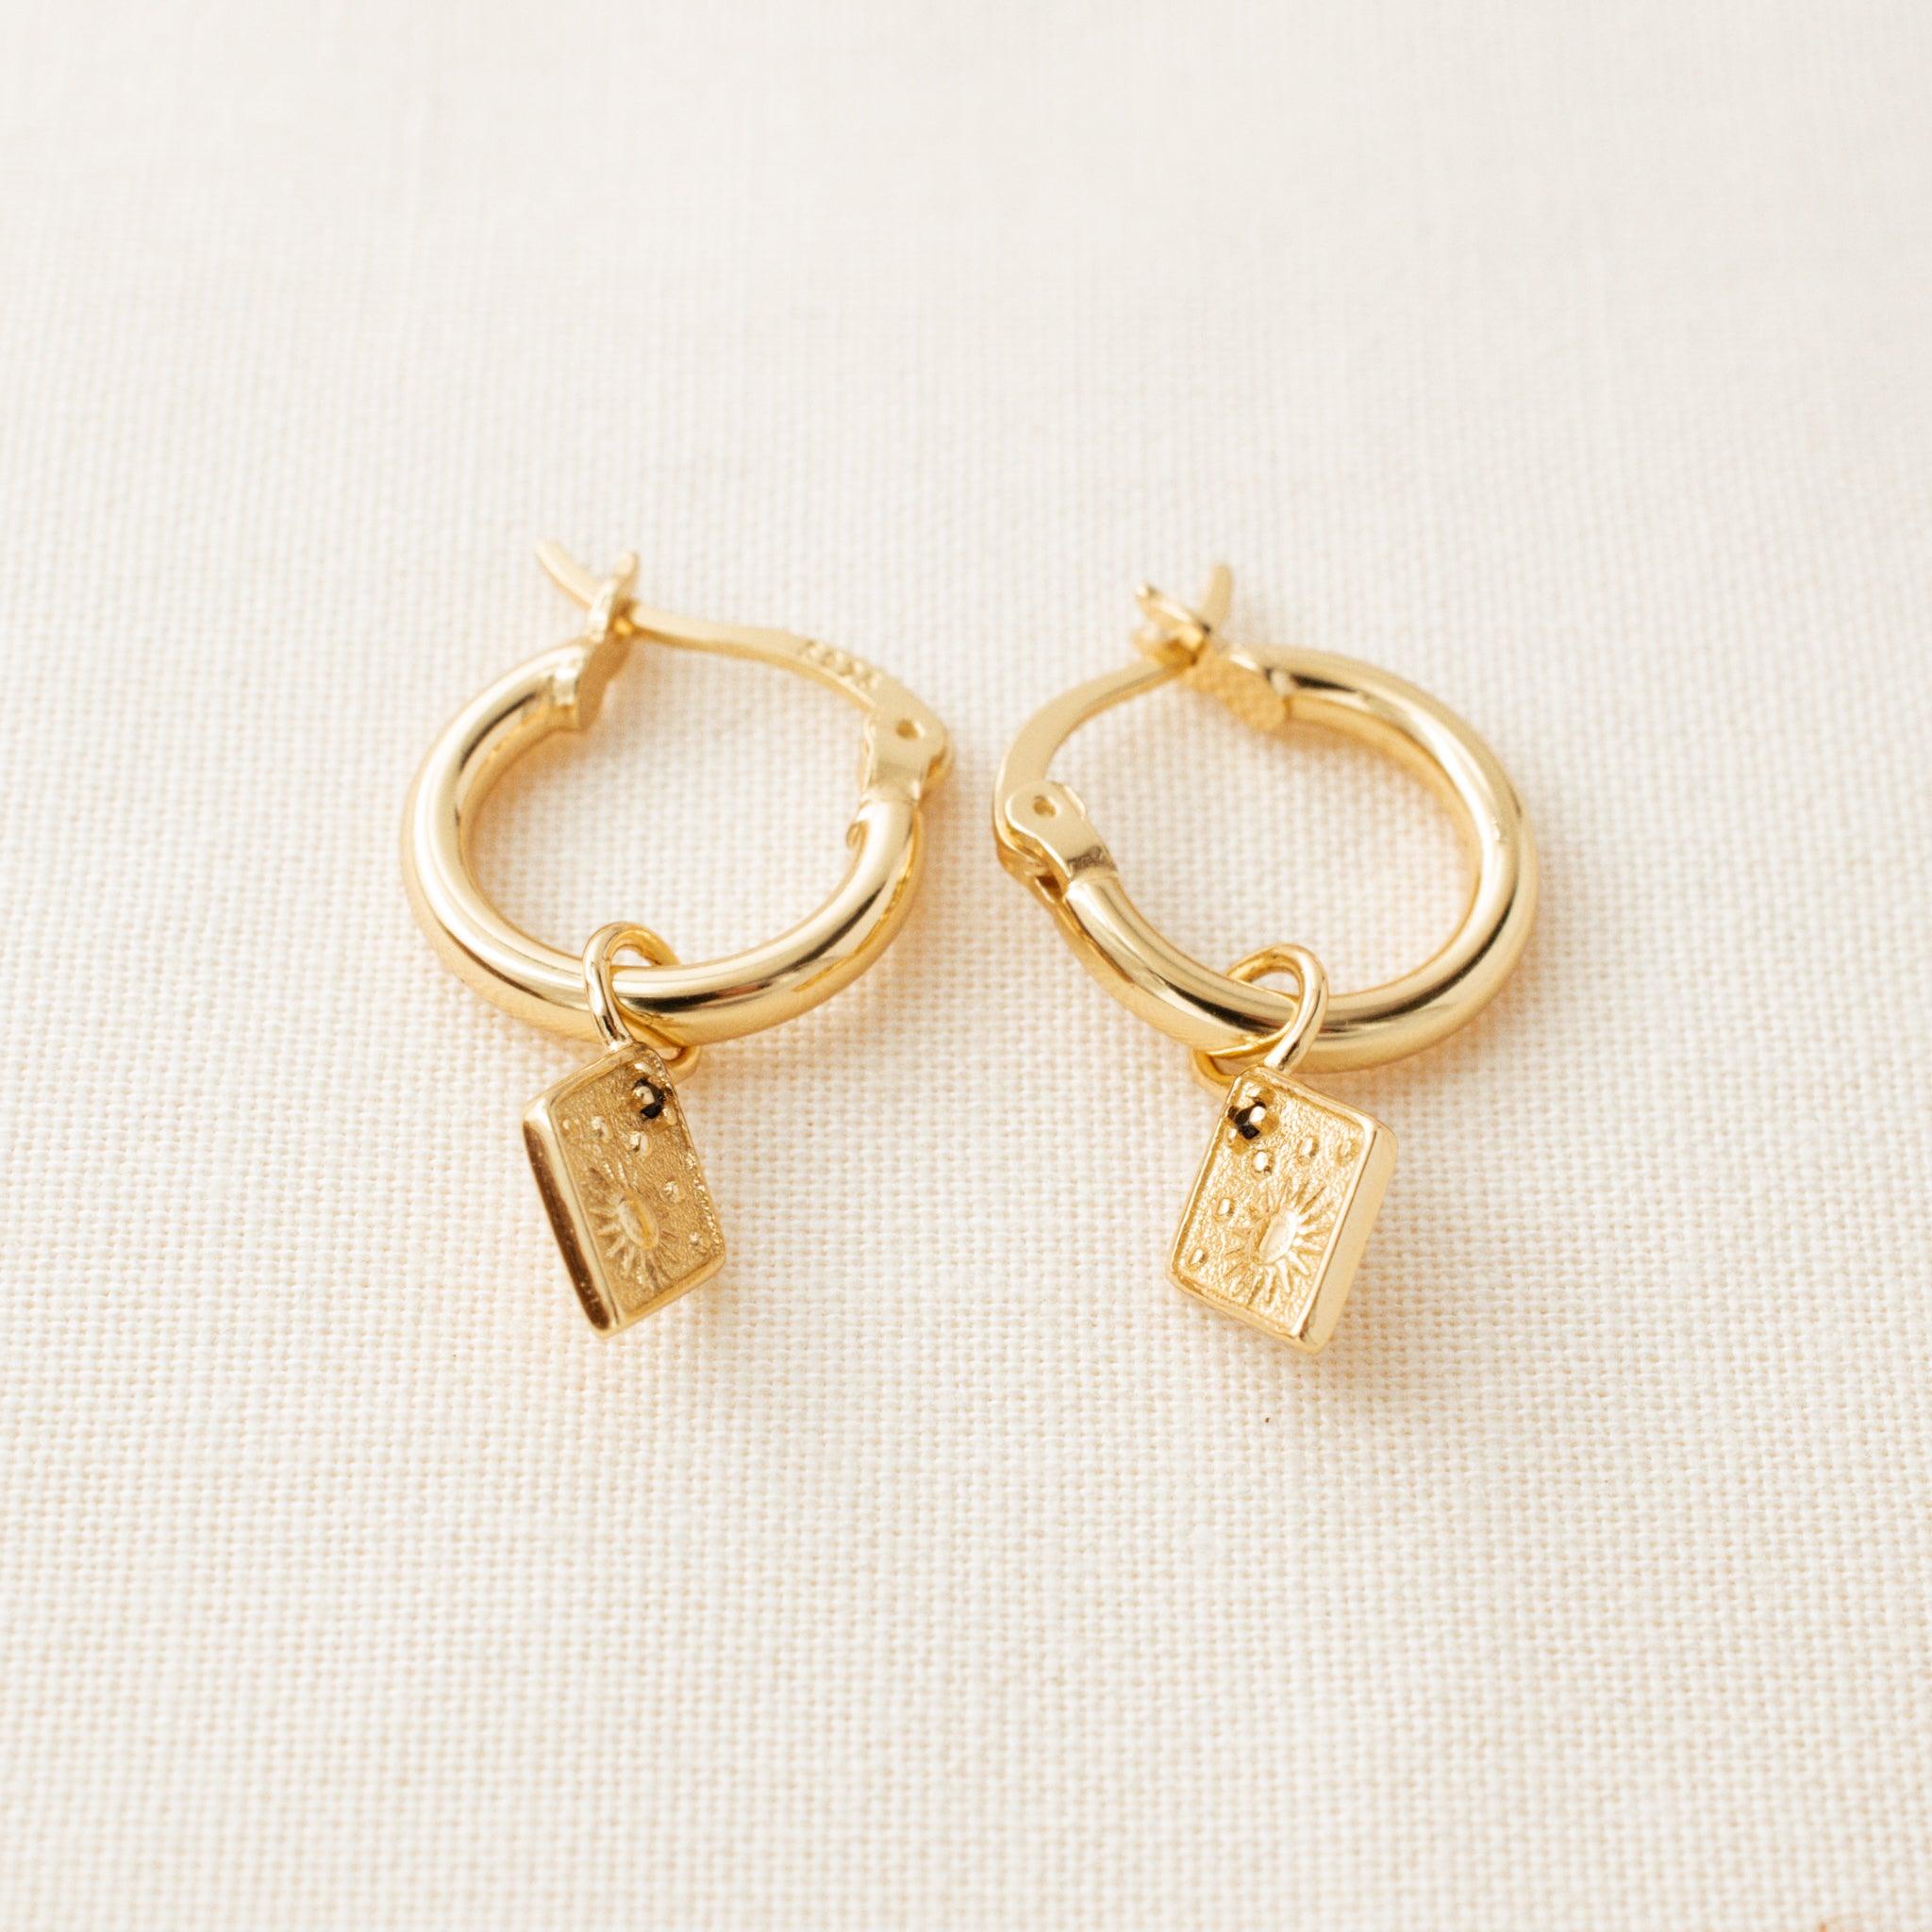 sun earrings charms on gold hoop earrings